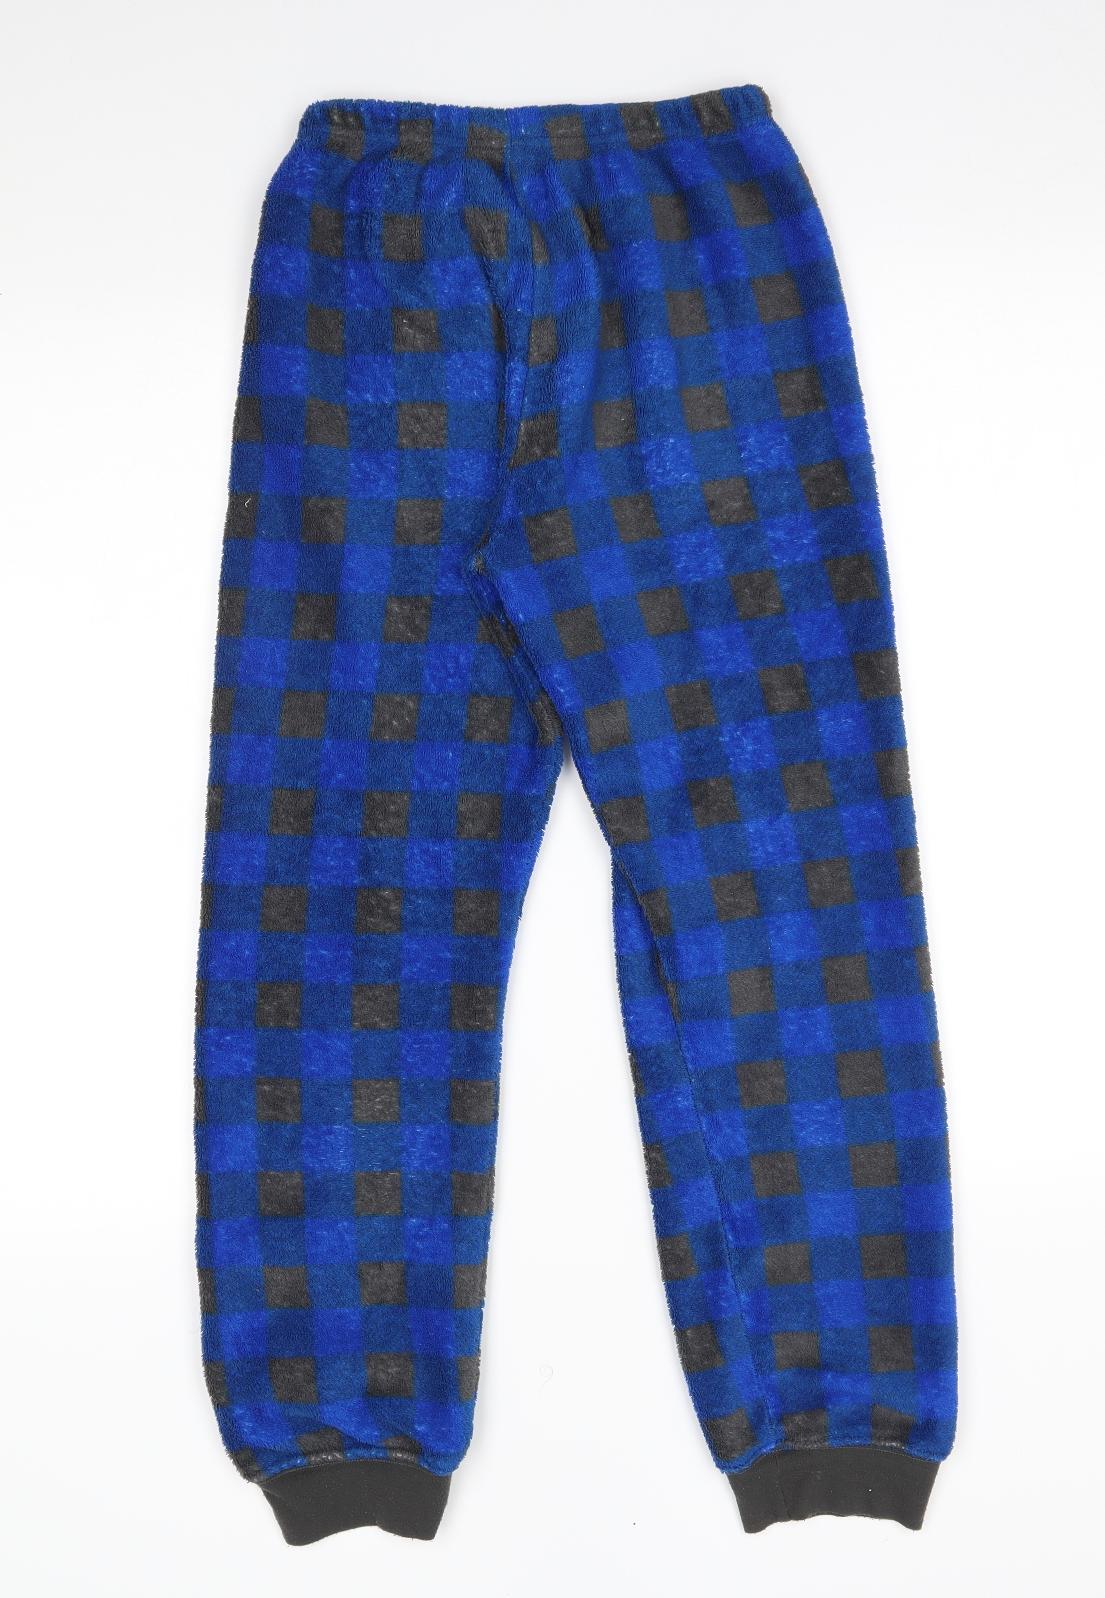 Primark Girls Blue Plaid   Pyjama Pants Size 11-12 Years